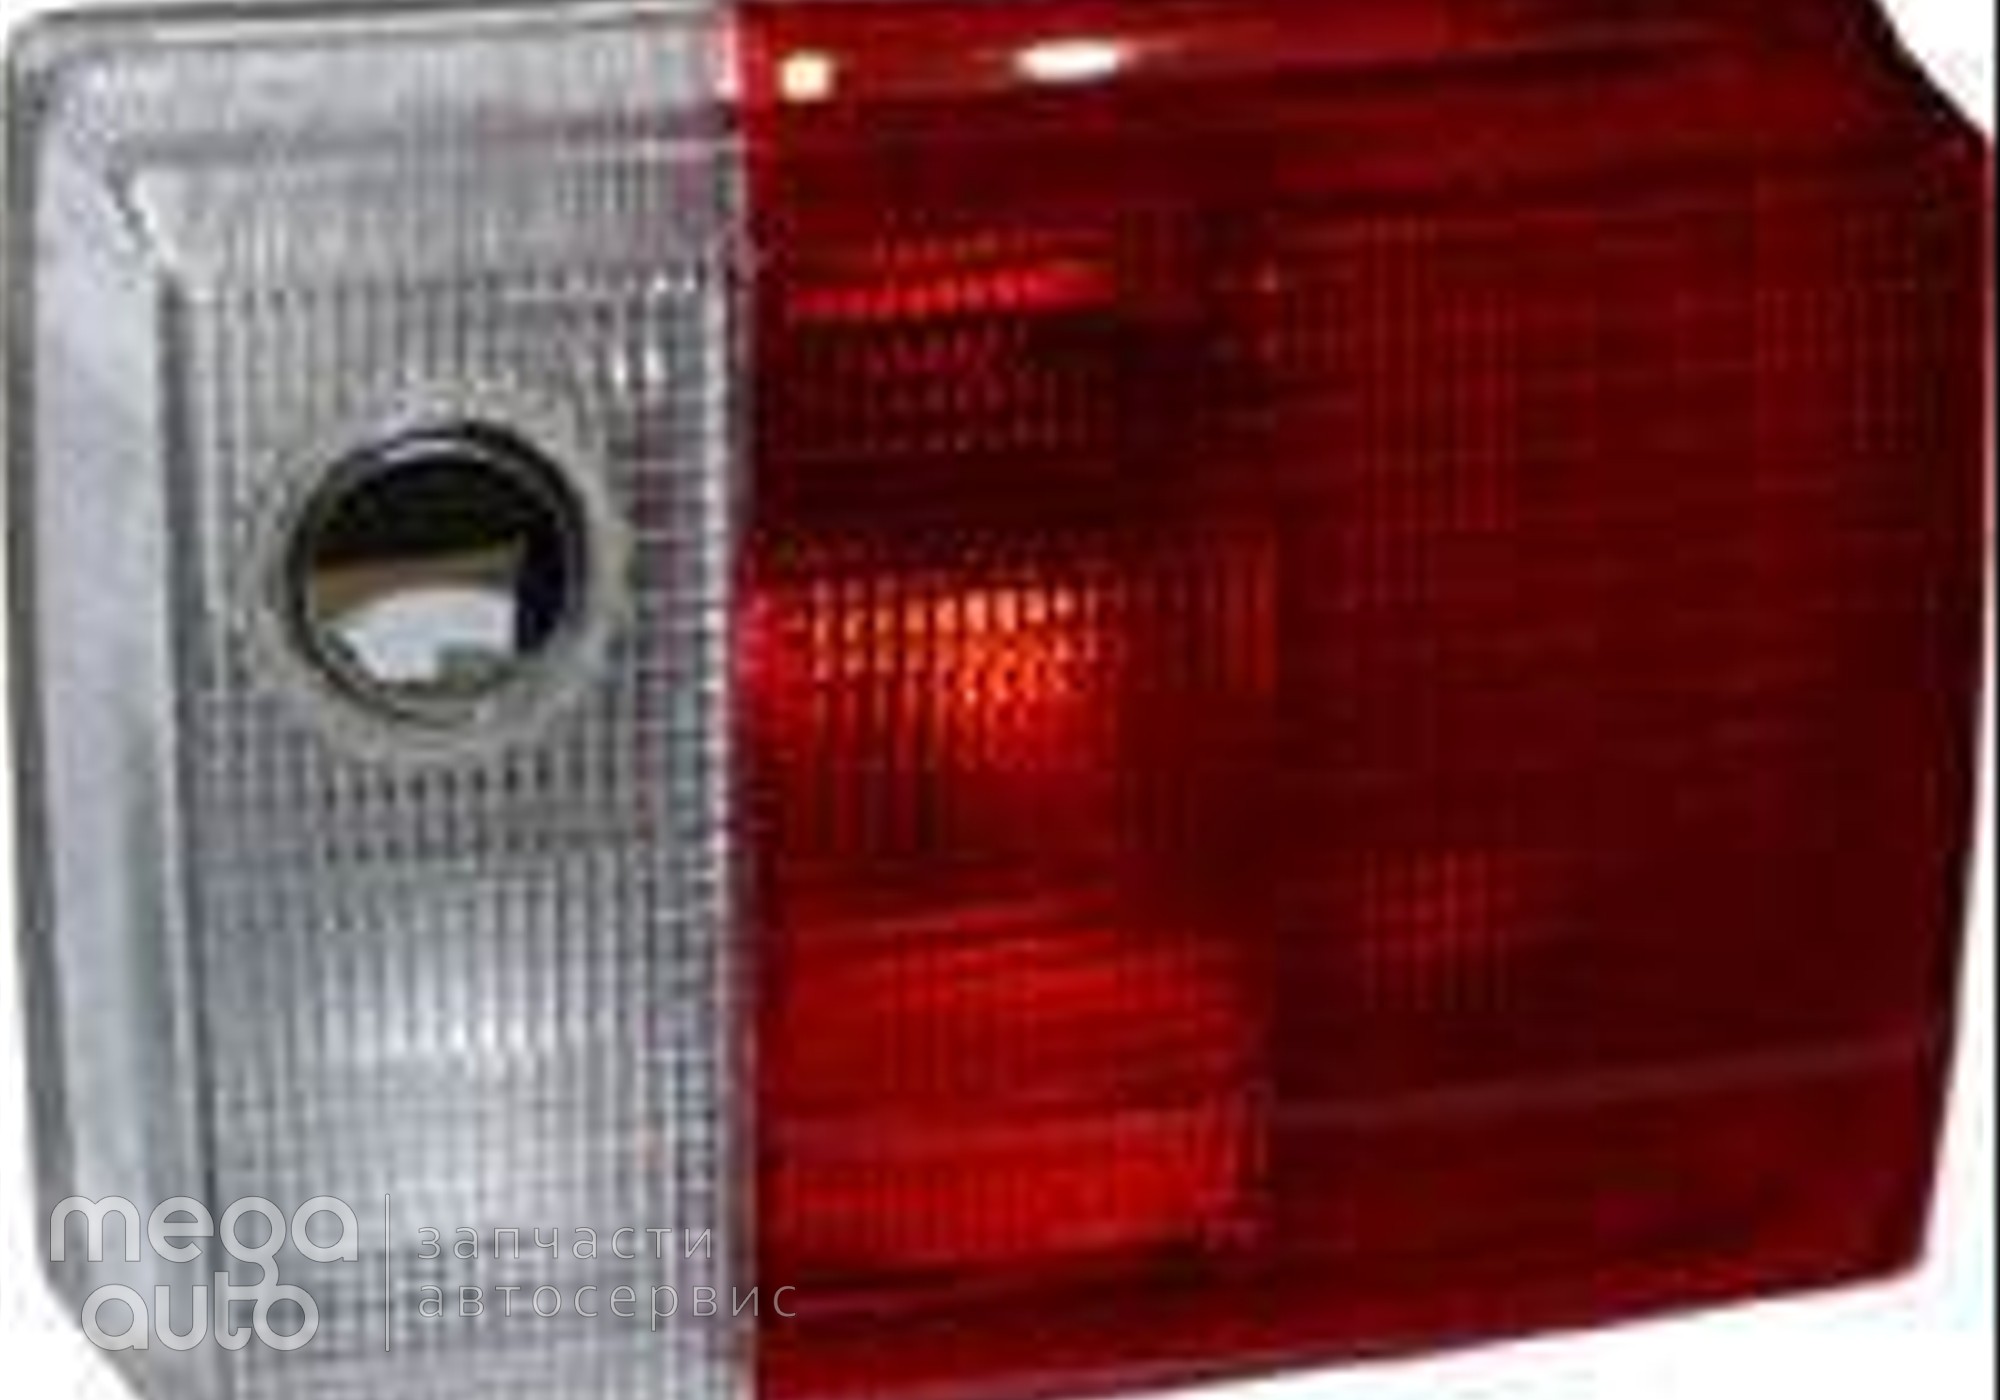 17A5270015B3 Фонарь задний правый внутренний АУДИ 80 В3 для Audi 80 B3 (с 1986 по 1991)